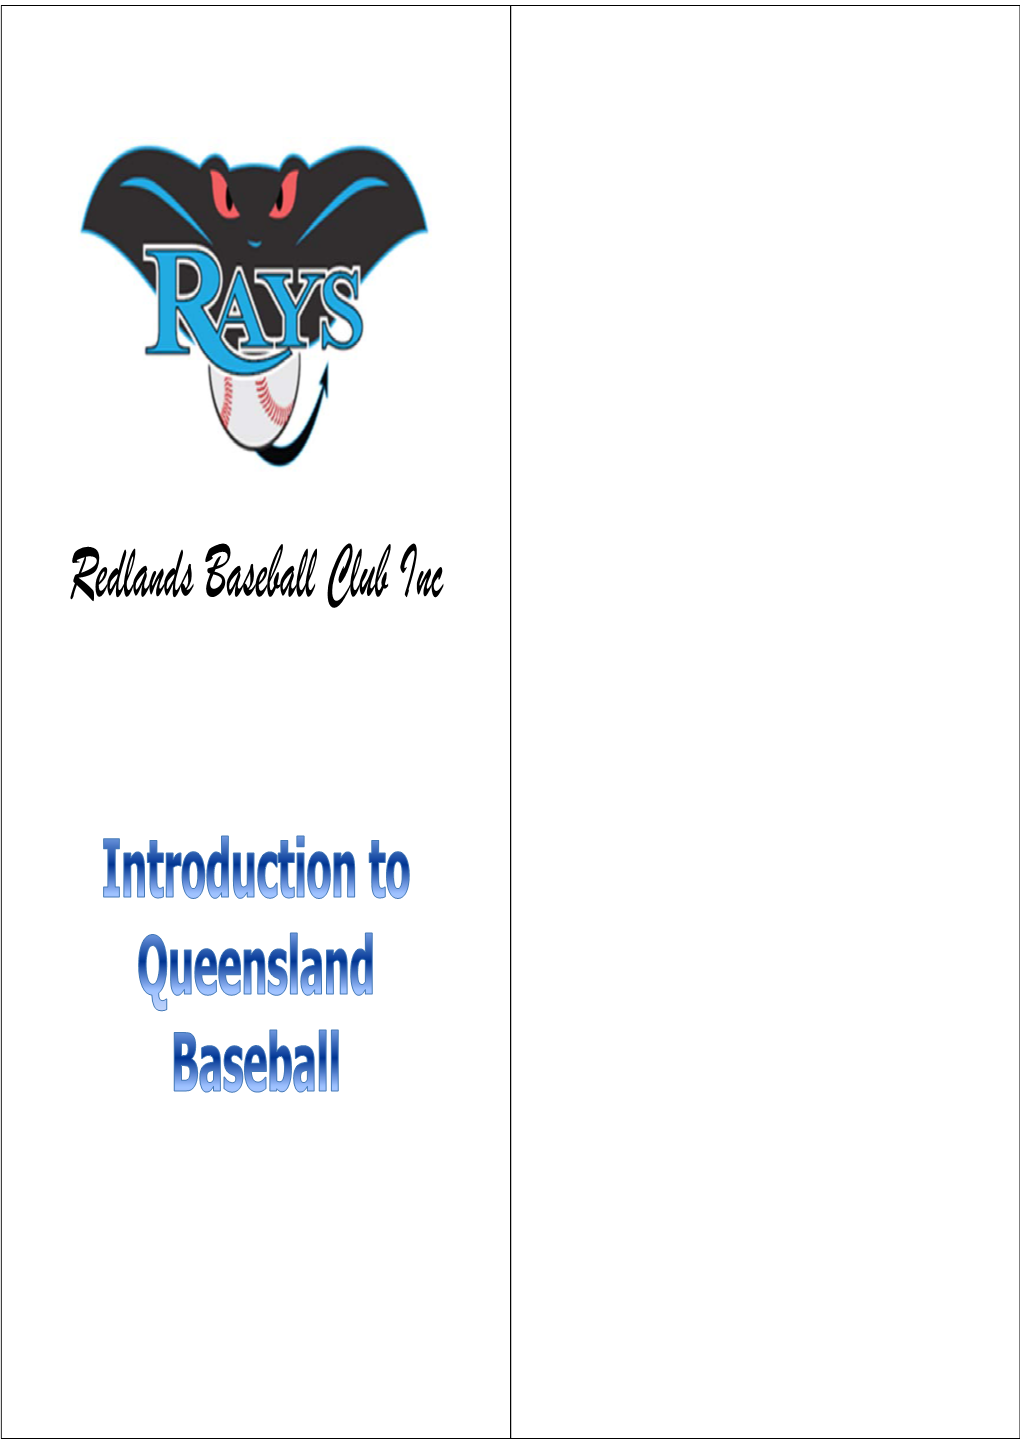 Redlands Baseball Club Inc